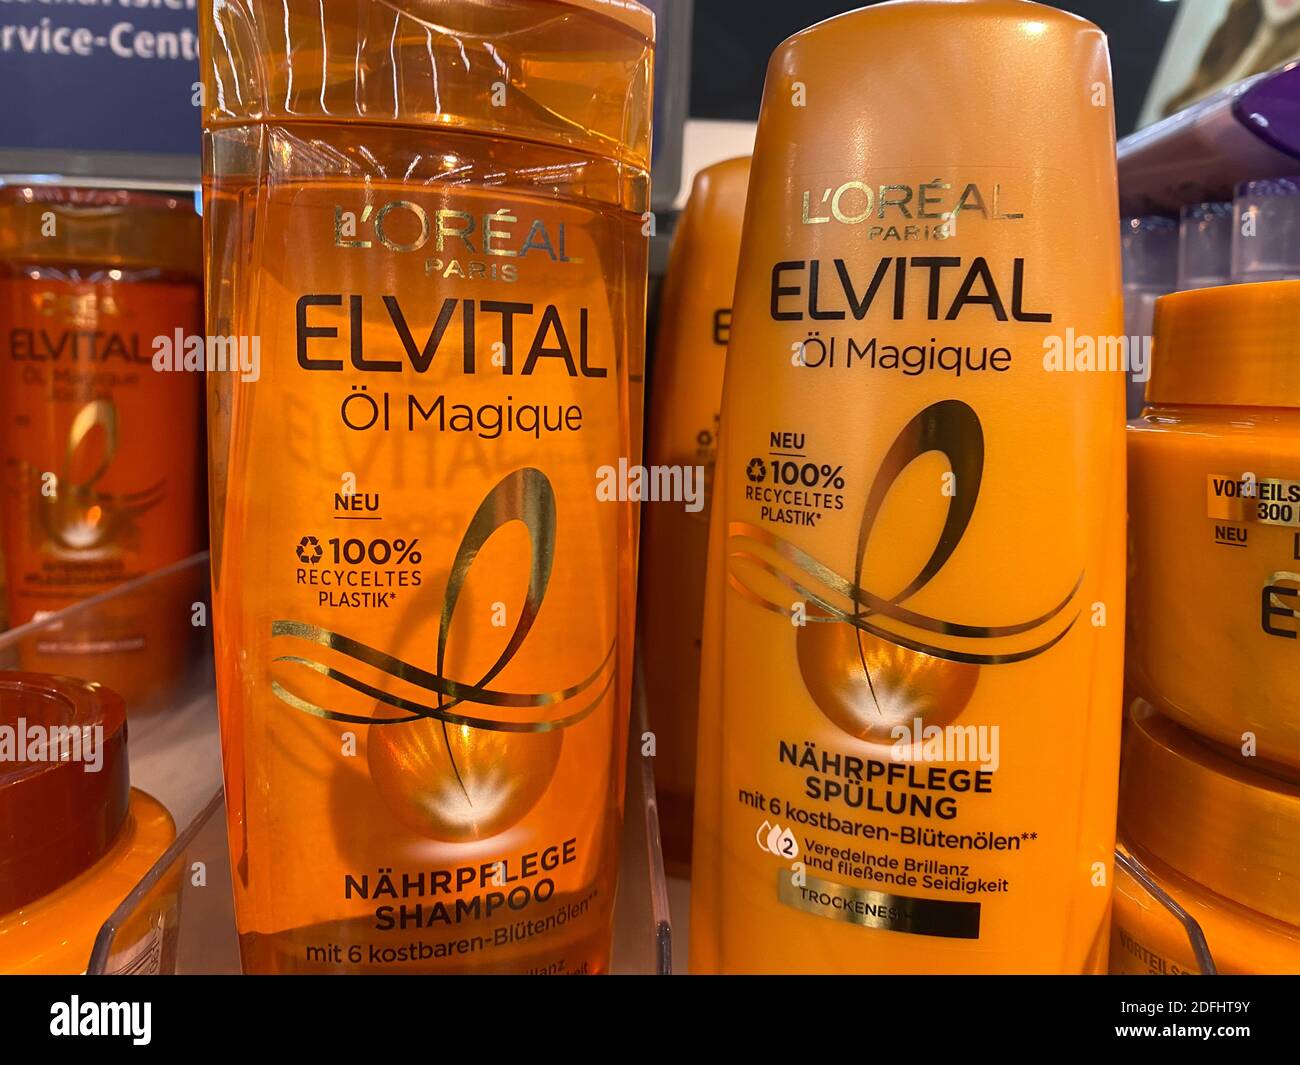 Viersen, Germany - May 9. 2020: Closeup of bottles loreal Elvital shampoo in shelf of german supermarket Stock Photo